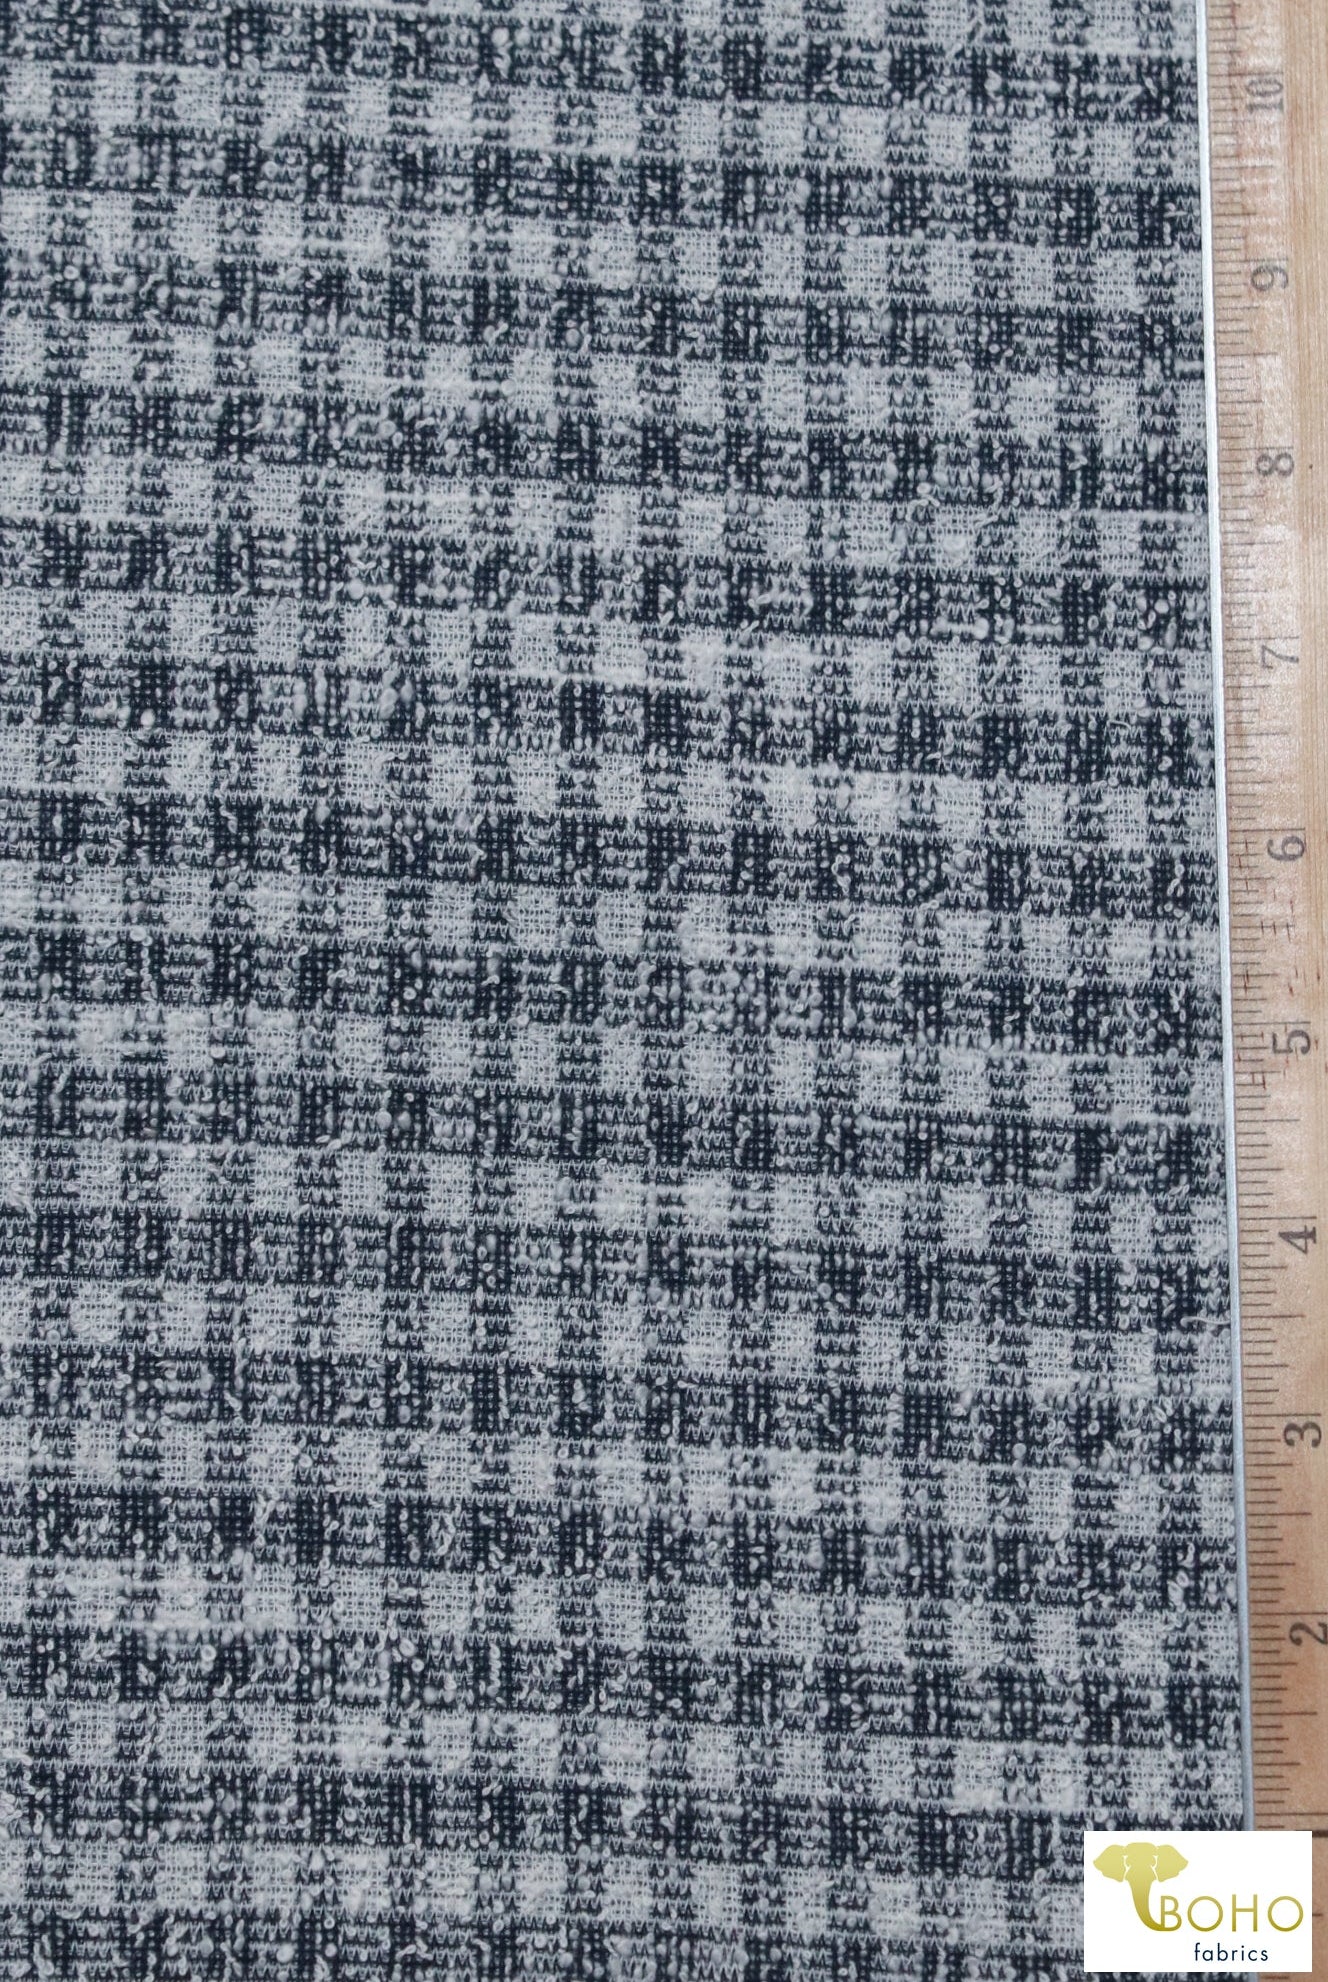 Gingham Jacquard in Navy/Ivory. JQD-111 - Boho Fabrics